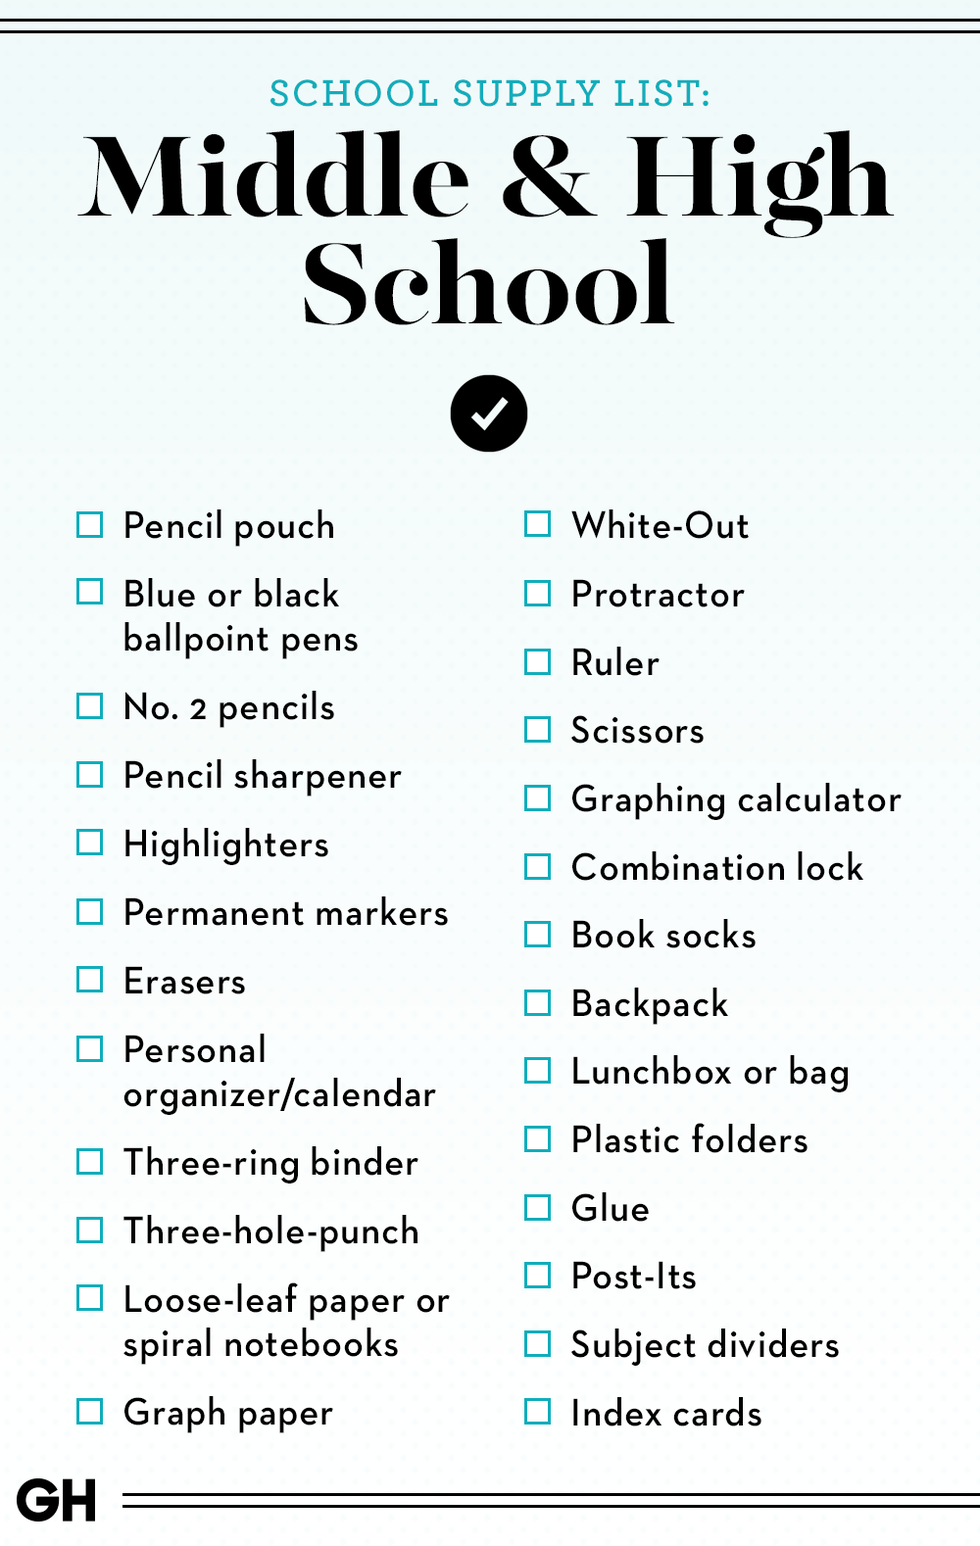 Top 20 Back to School Supplies